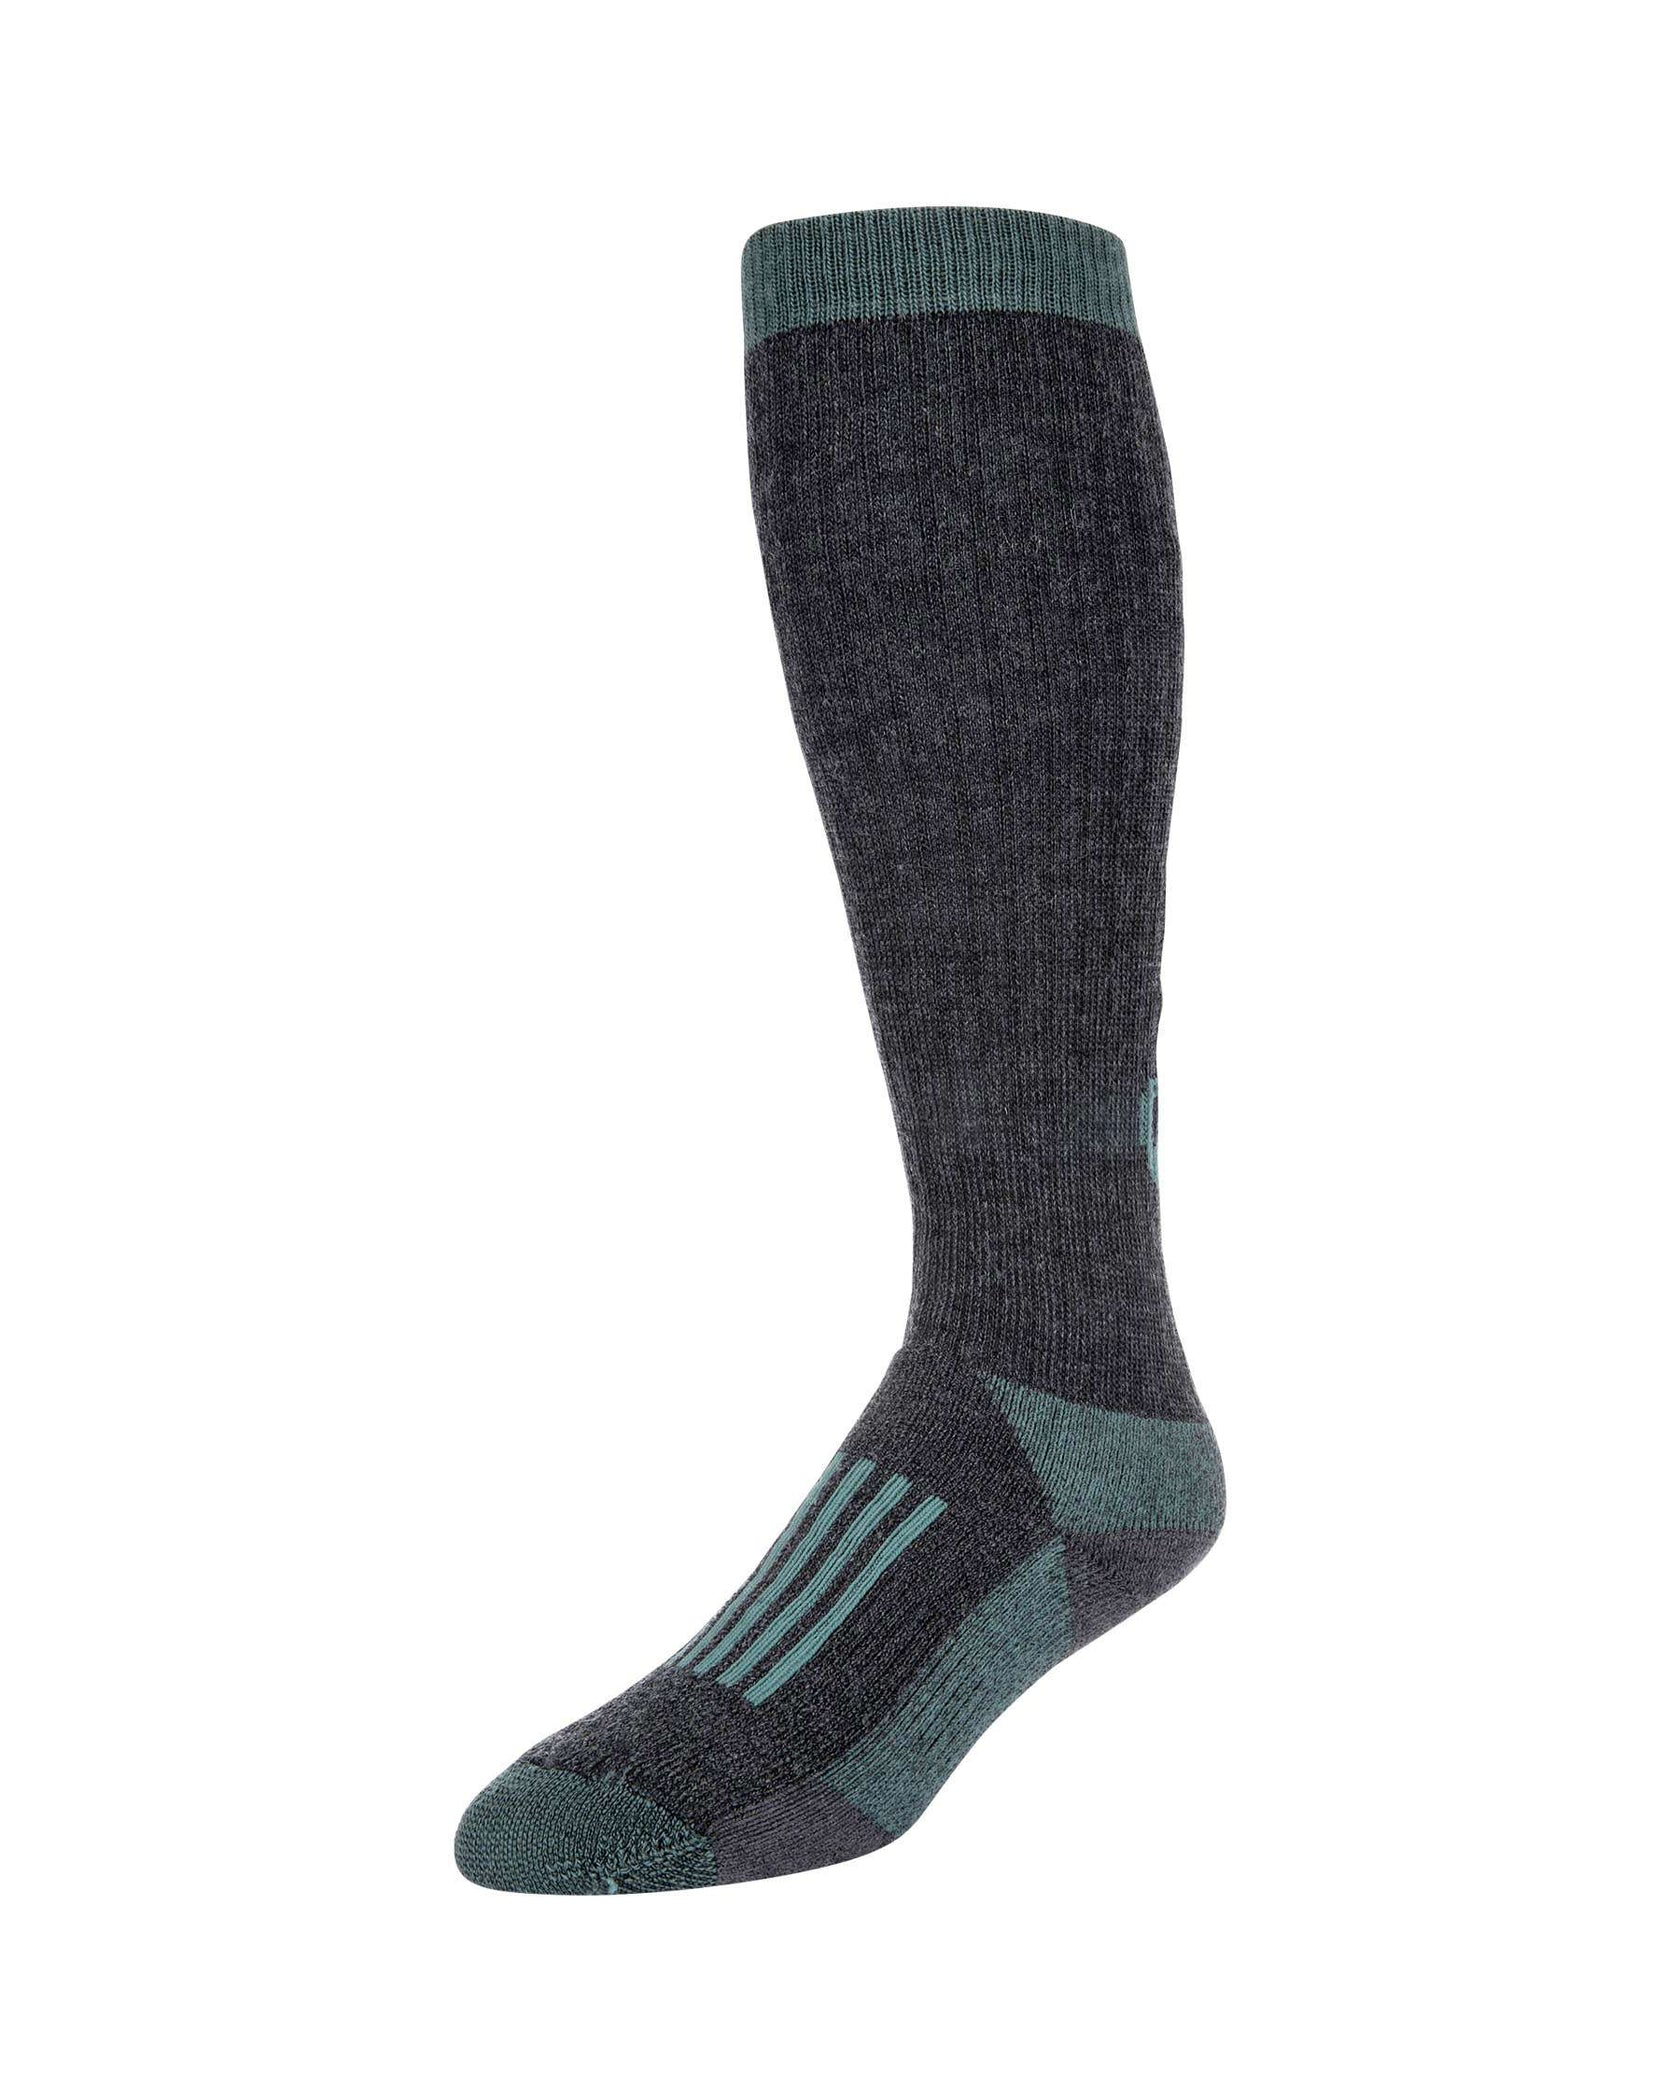 Simms W's Merino Thermal OTC Socks - Medium